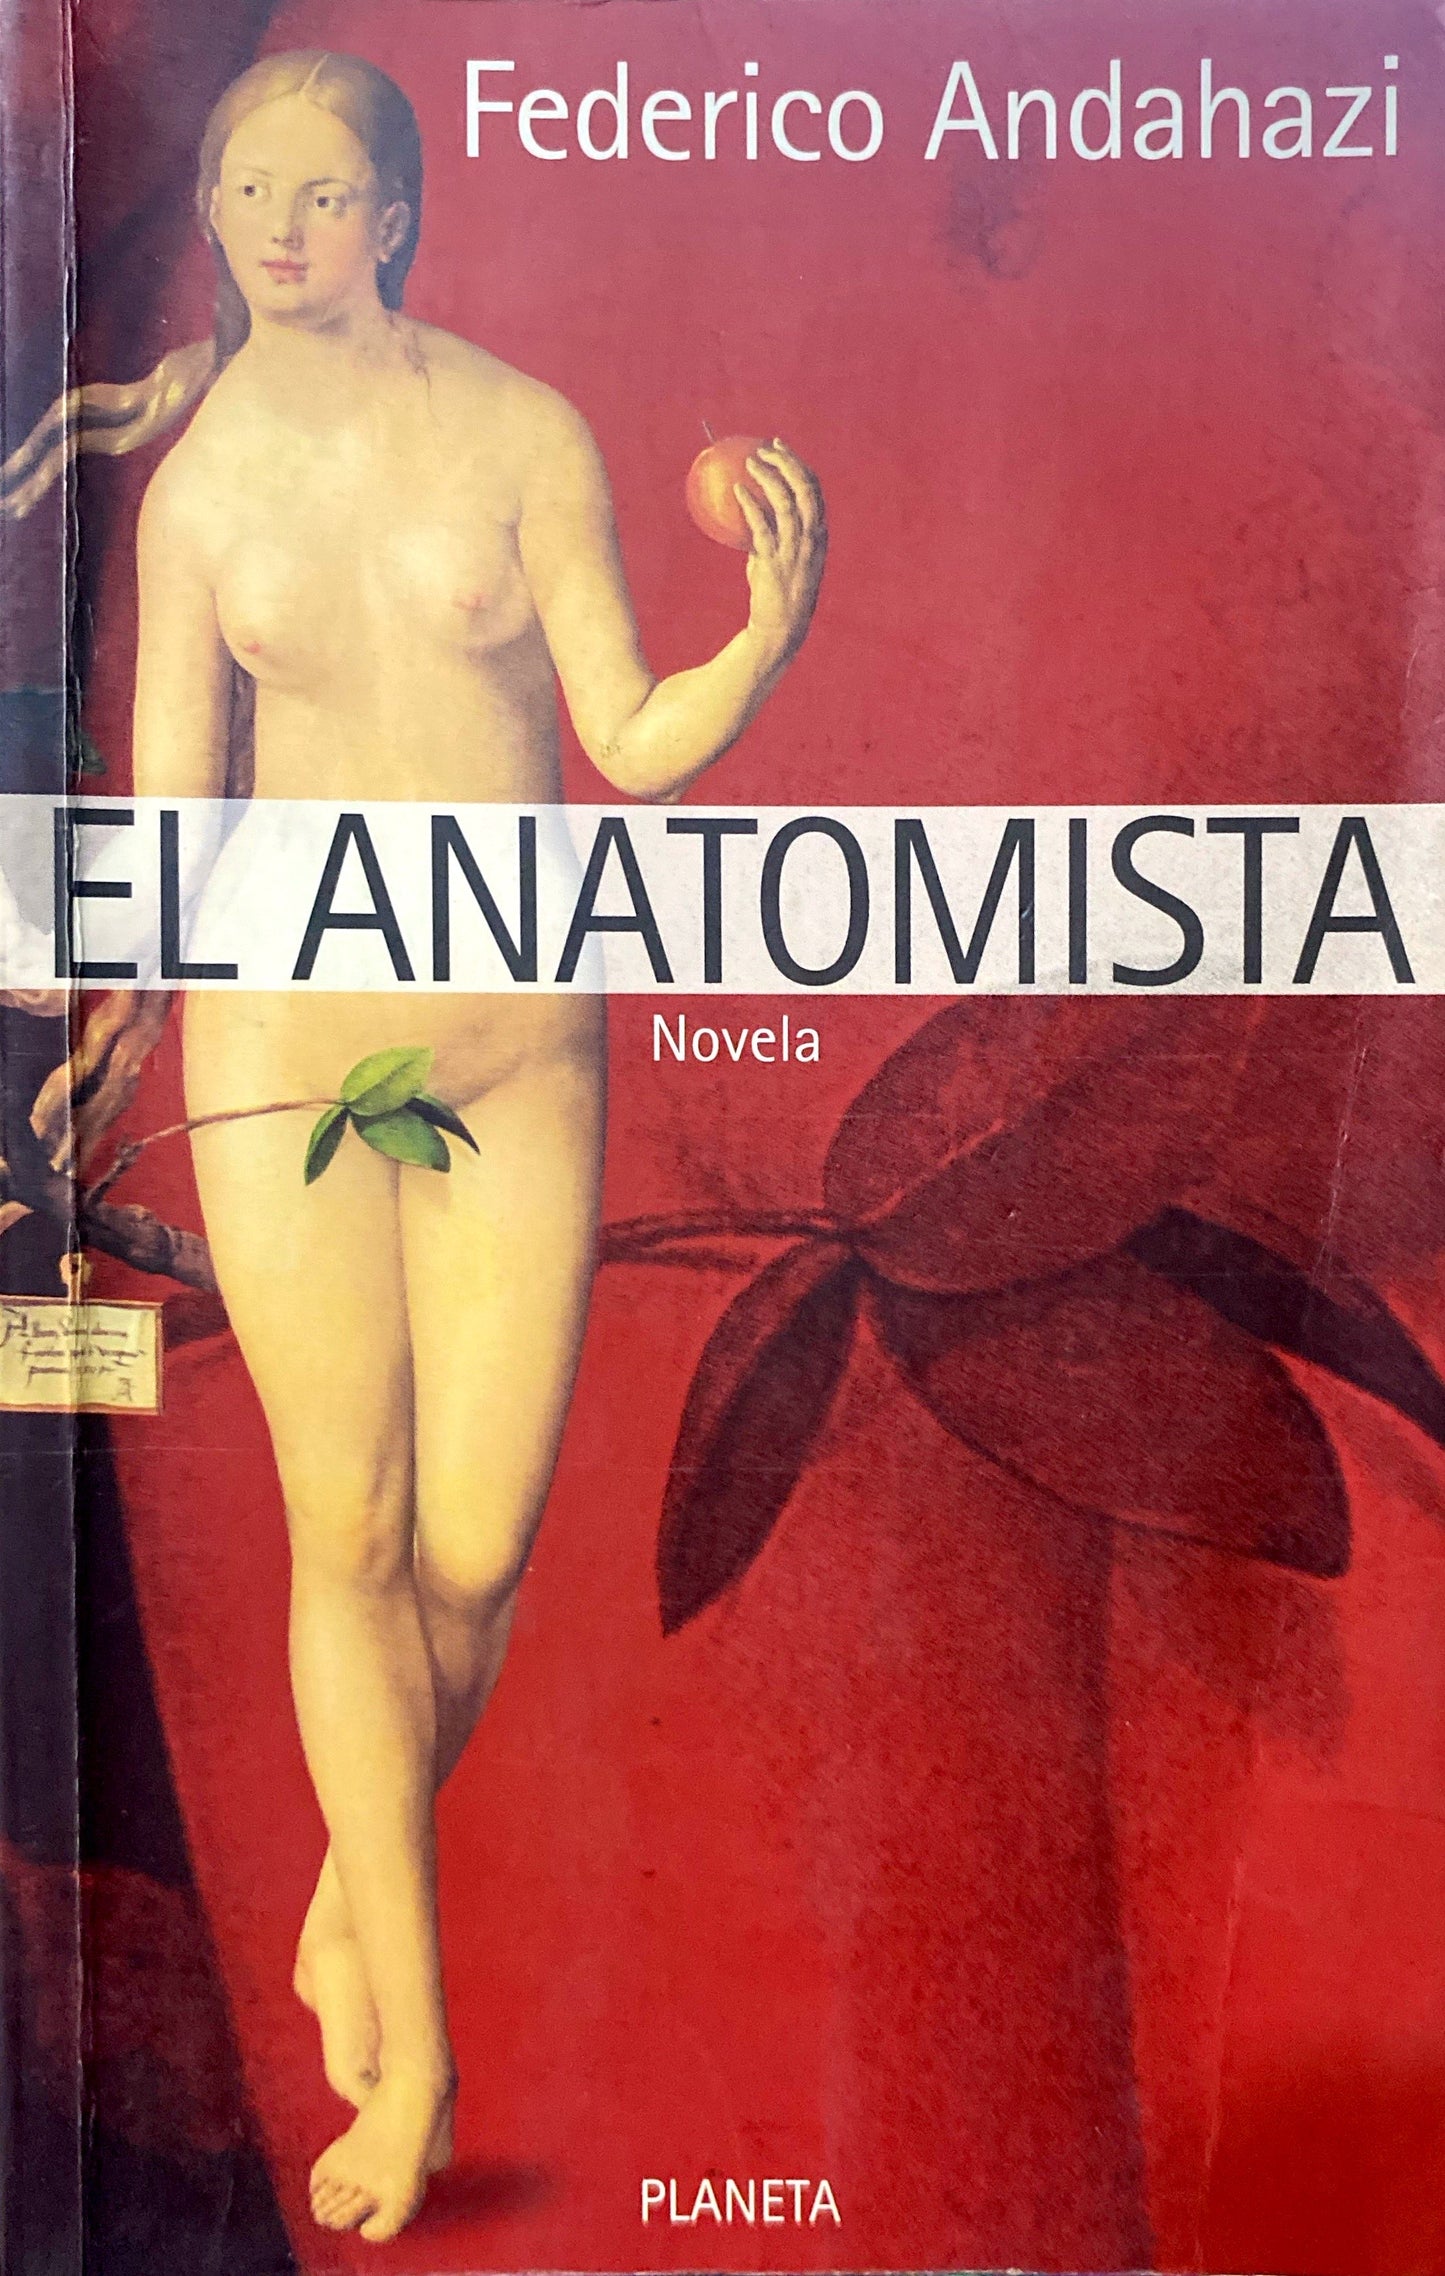 El anatomista | Federico Andahazi